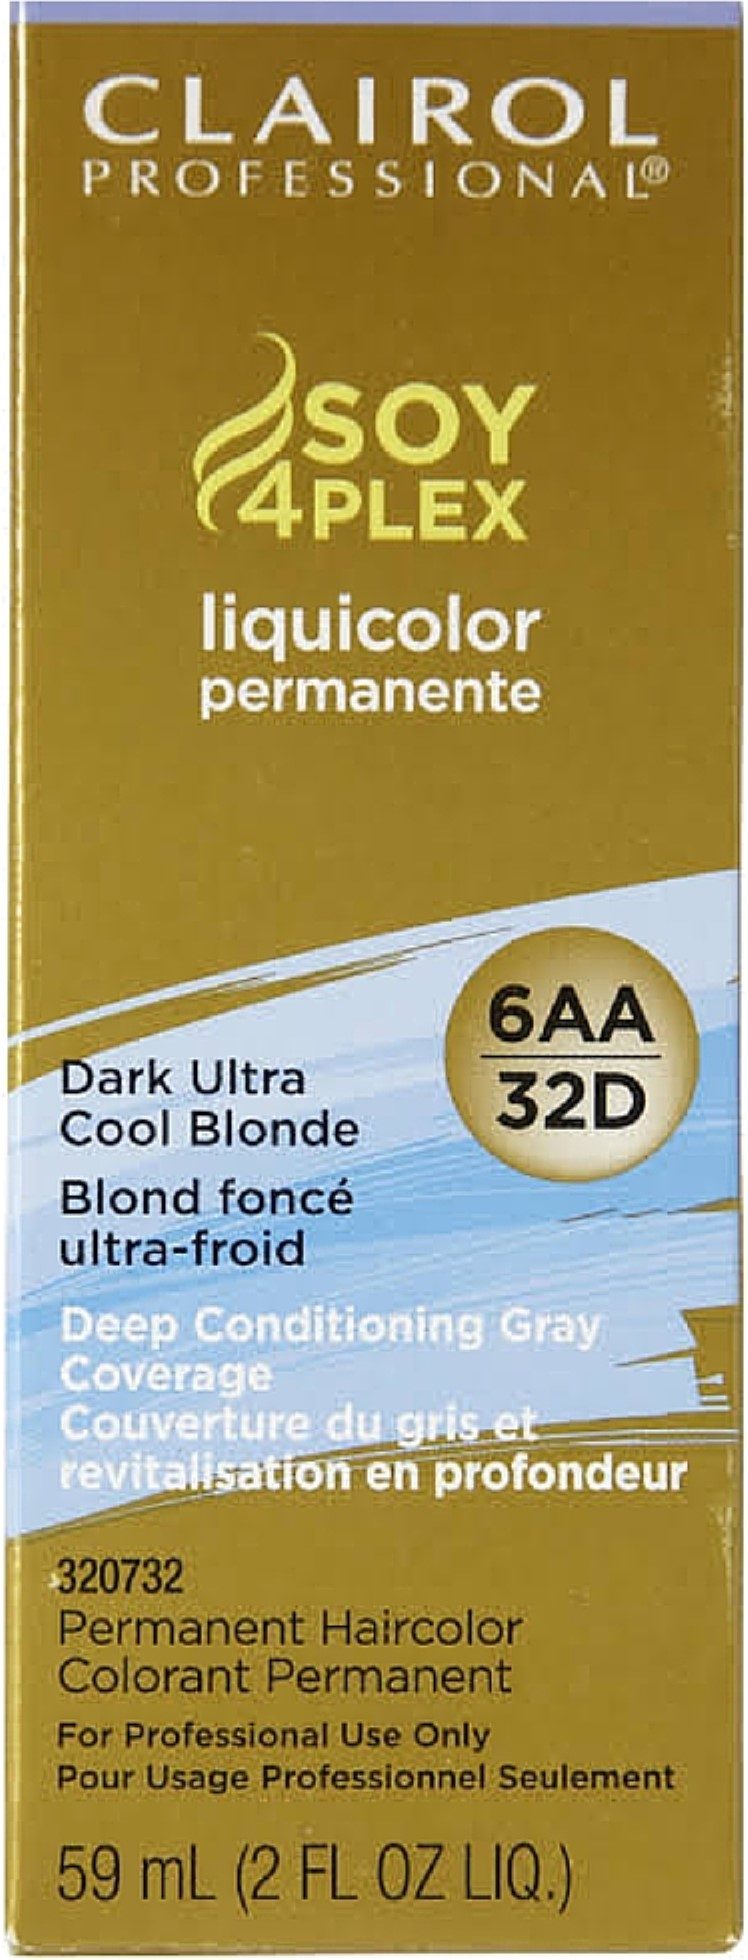 Soy4plex Liquicolor Permanent Hair Color